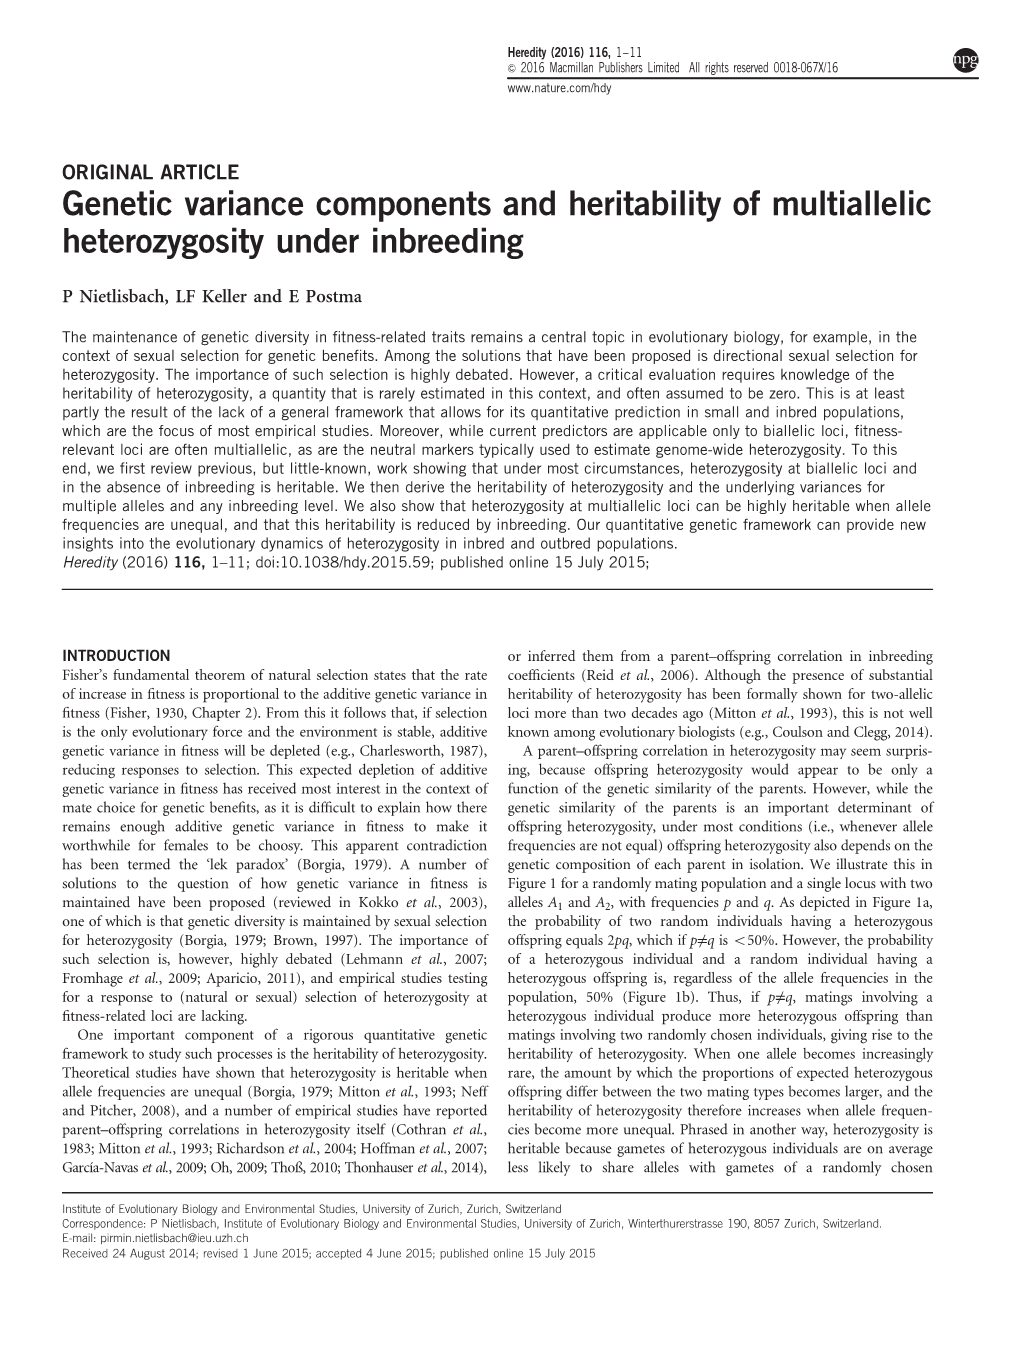 Genetic Variance Components and Heritability of Multiallelic Heterozygosity Under Inbreeding